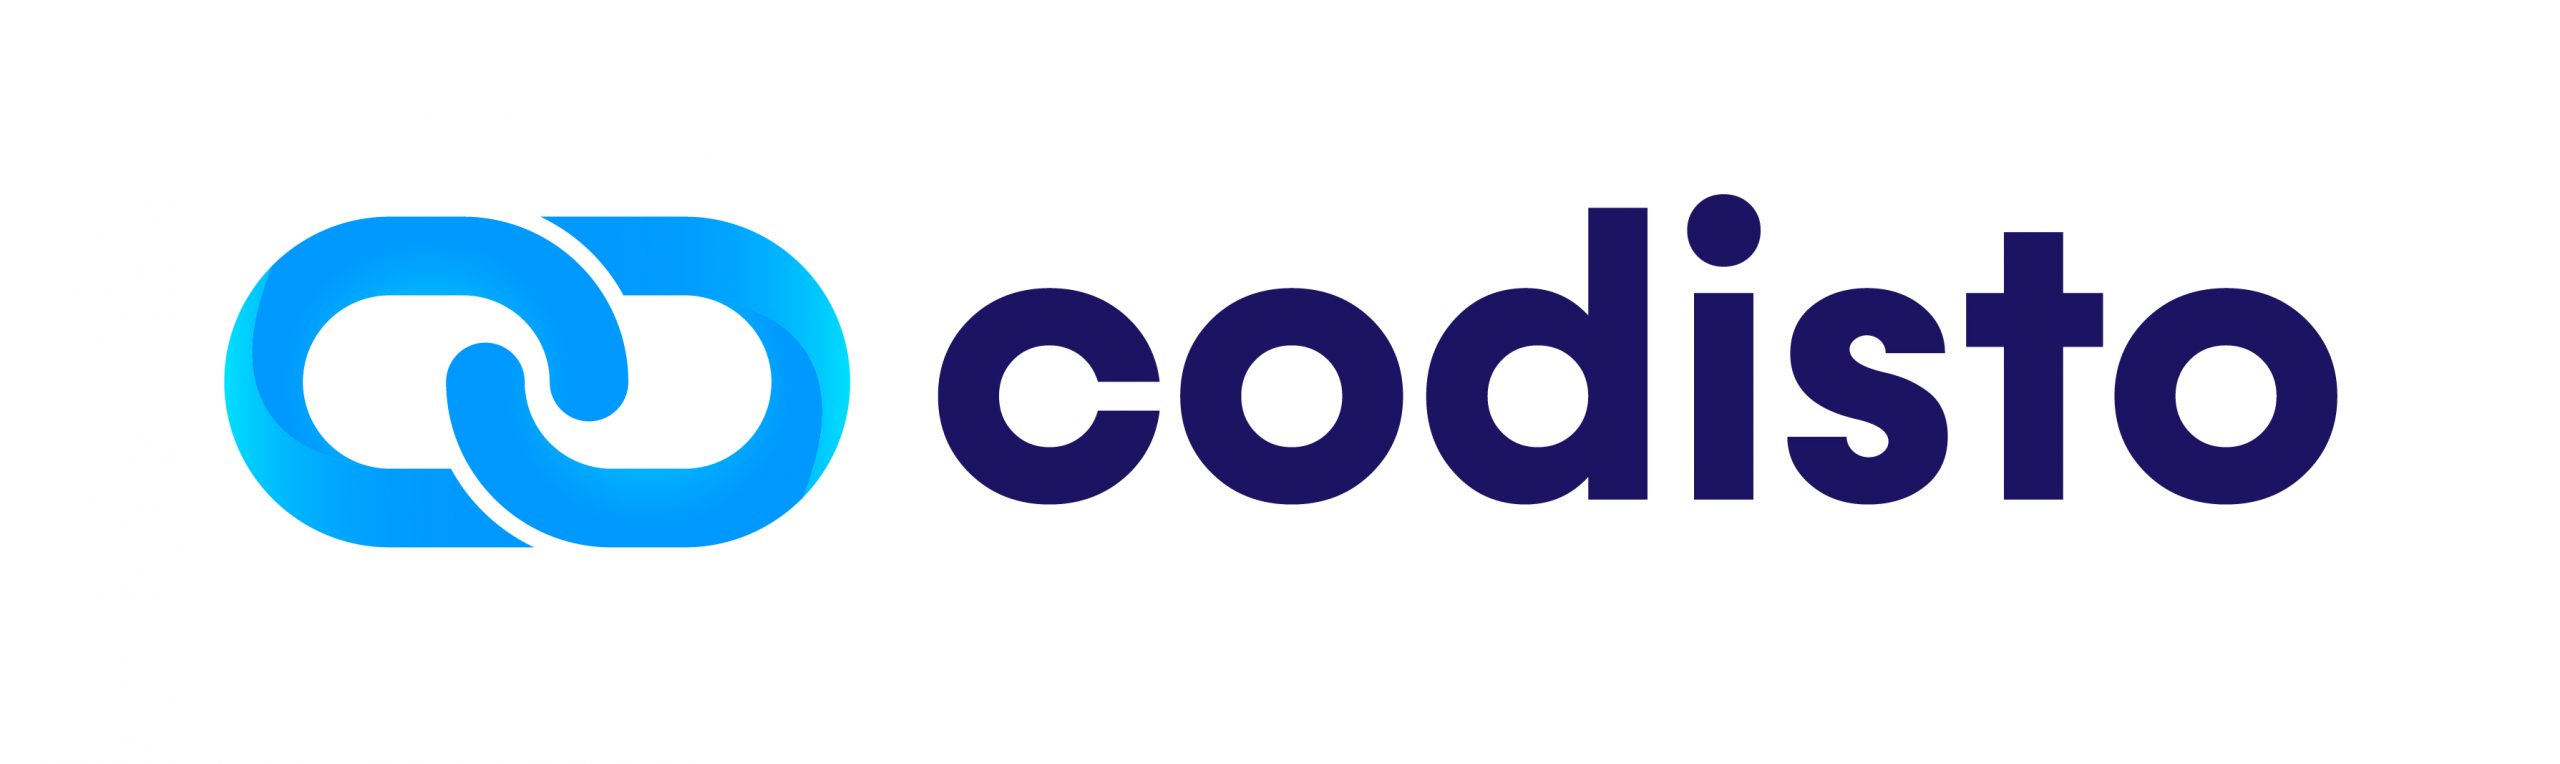 codisto logo